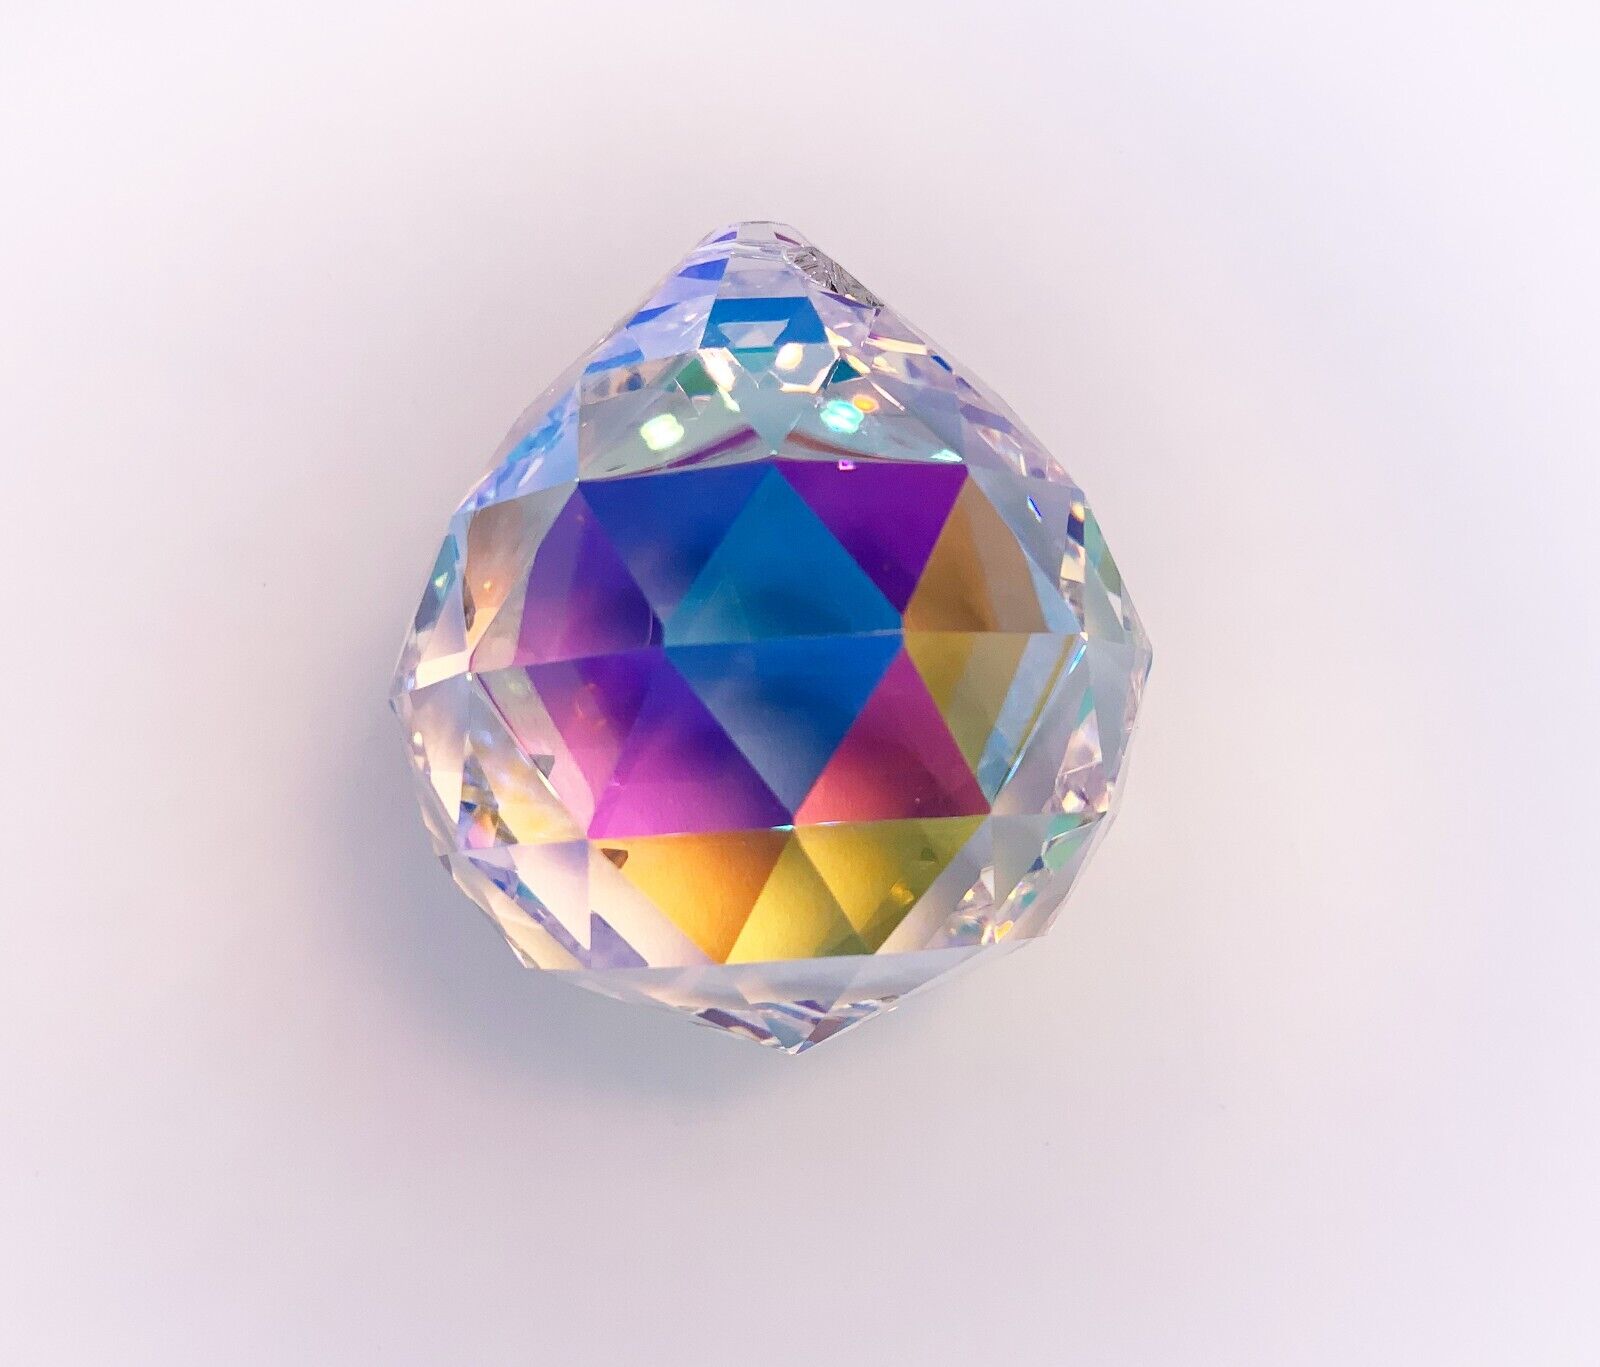 40mm Asfour Crystal, Clear AB, Crystal Sun Catcher, Crystal Ball Prisms - 1 Hole